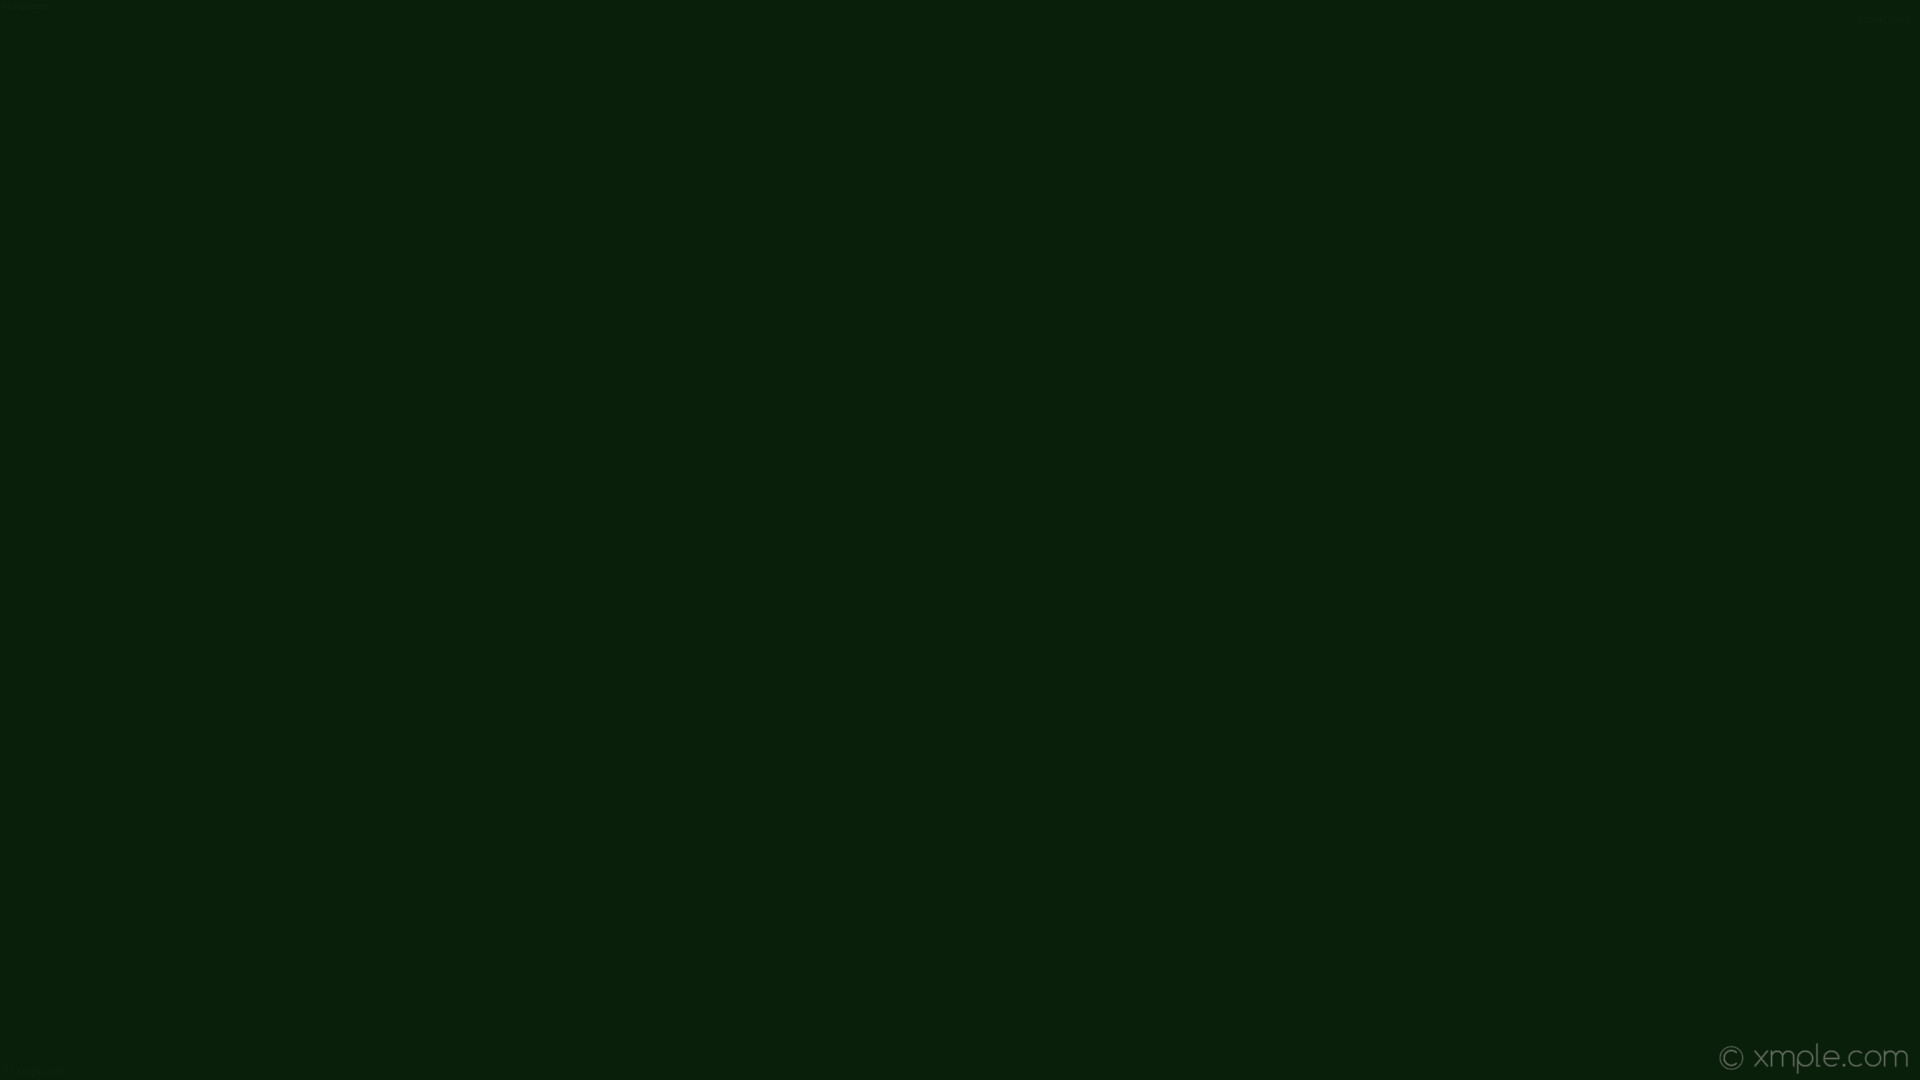 1920x1080 wallpaper green single one colour solid color plain dark green #0a1f09